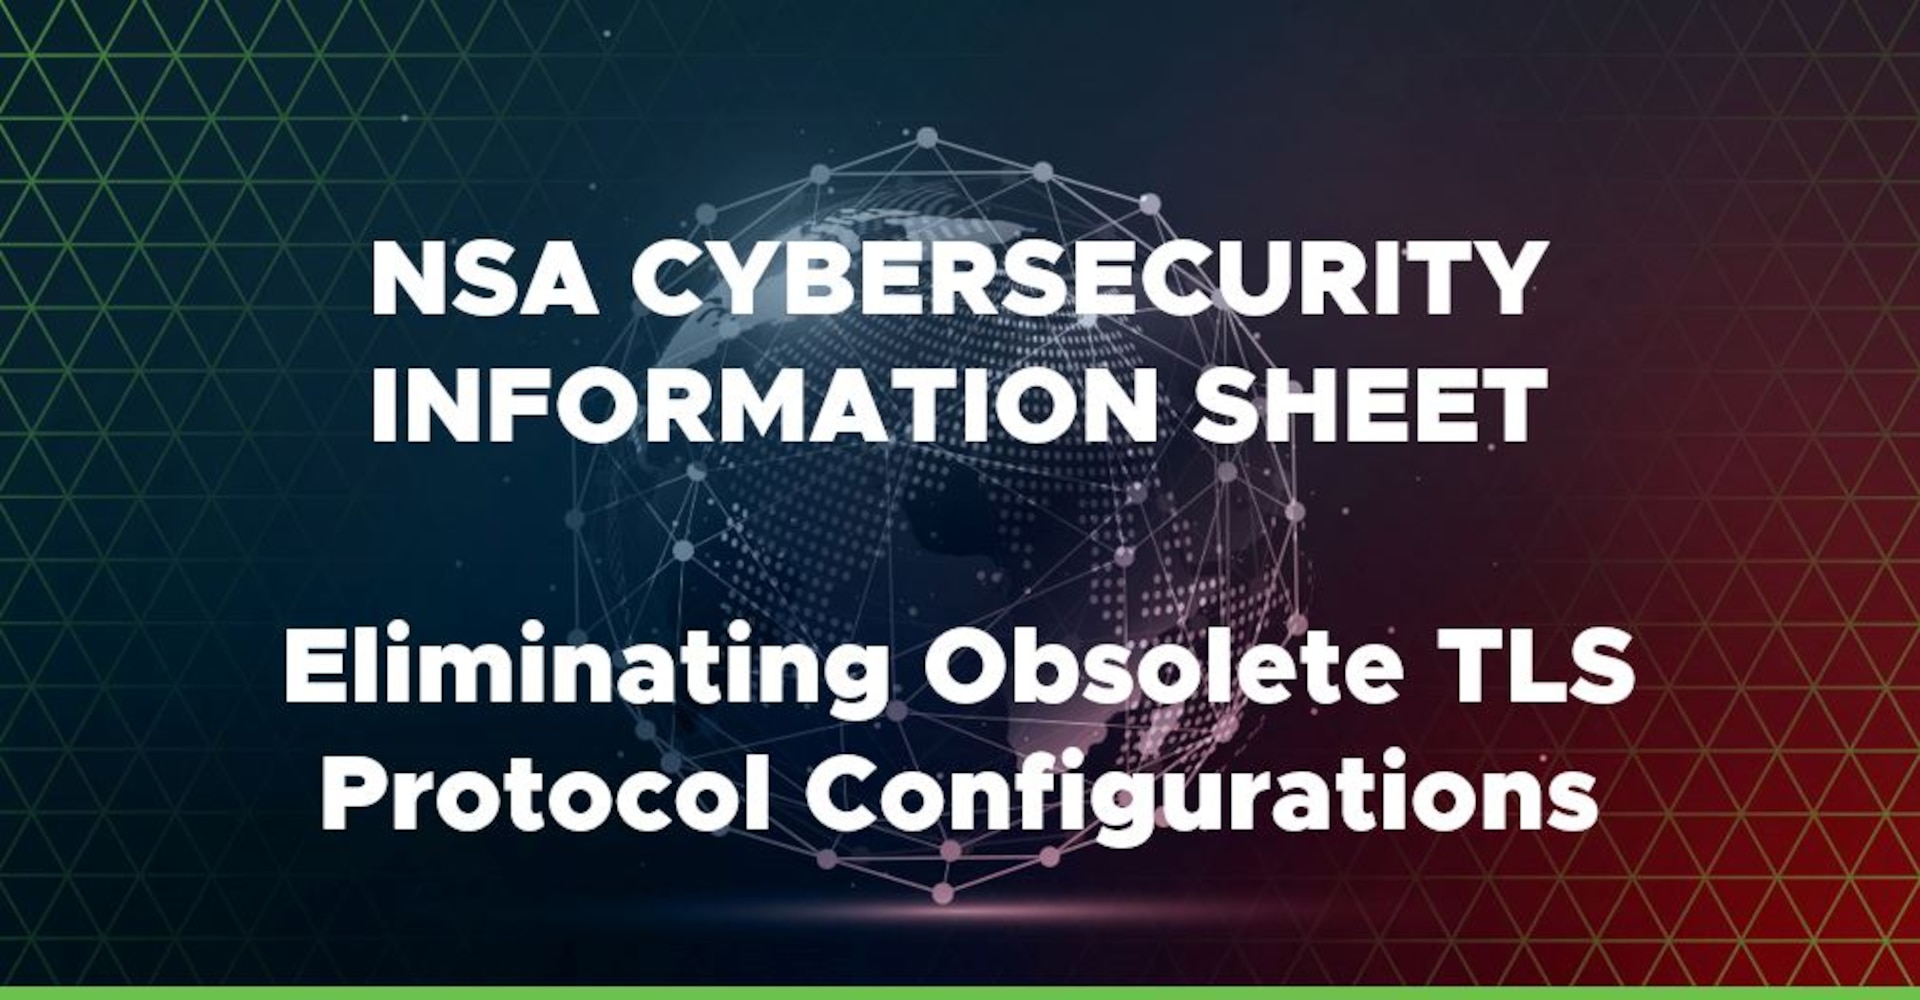 NSA Cybersecurity Advisory: Eliminating Obsolete TLS Protocol Configurations